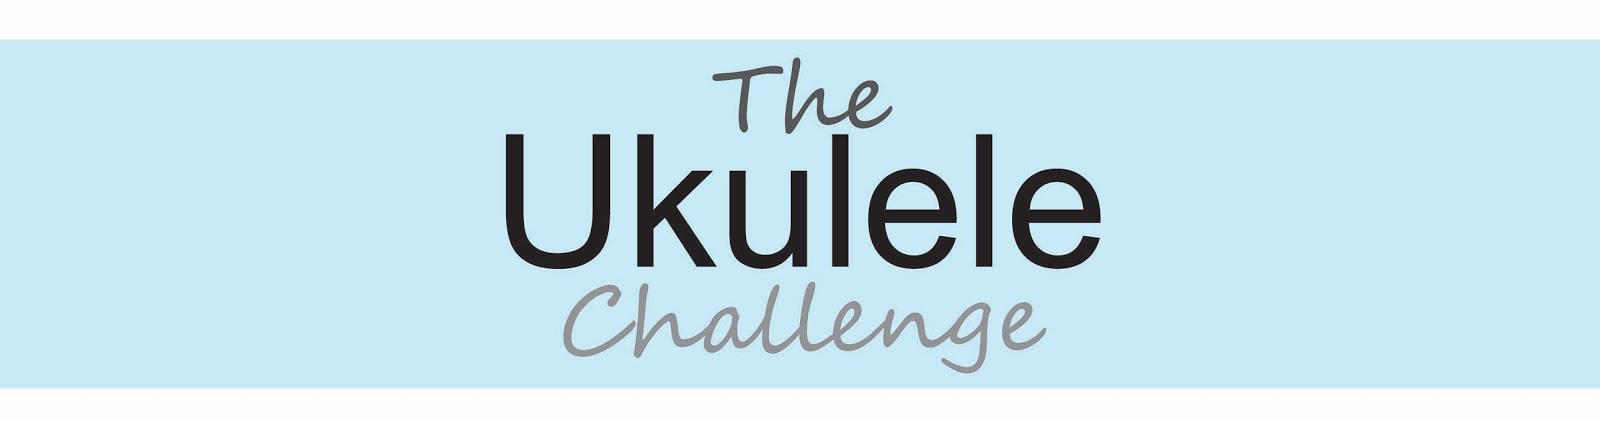 The Ukulele Challenge